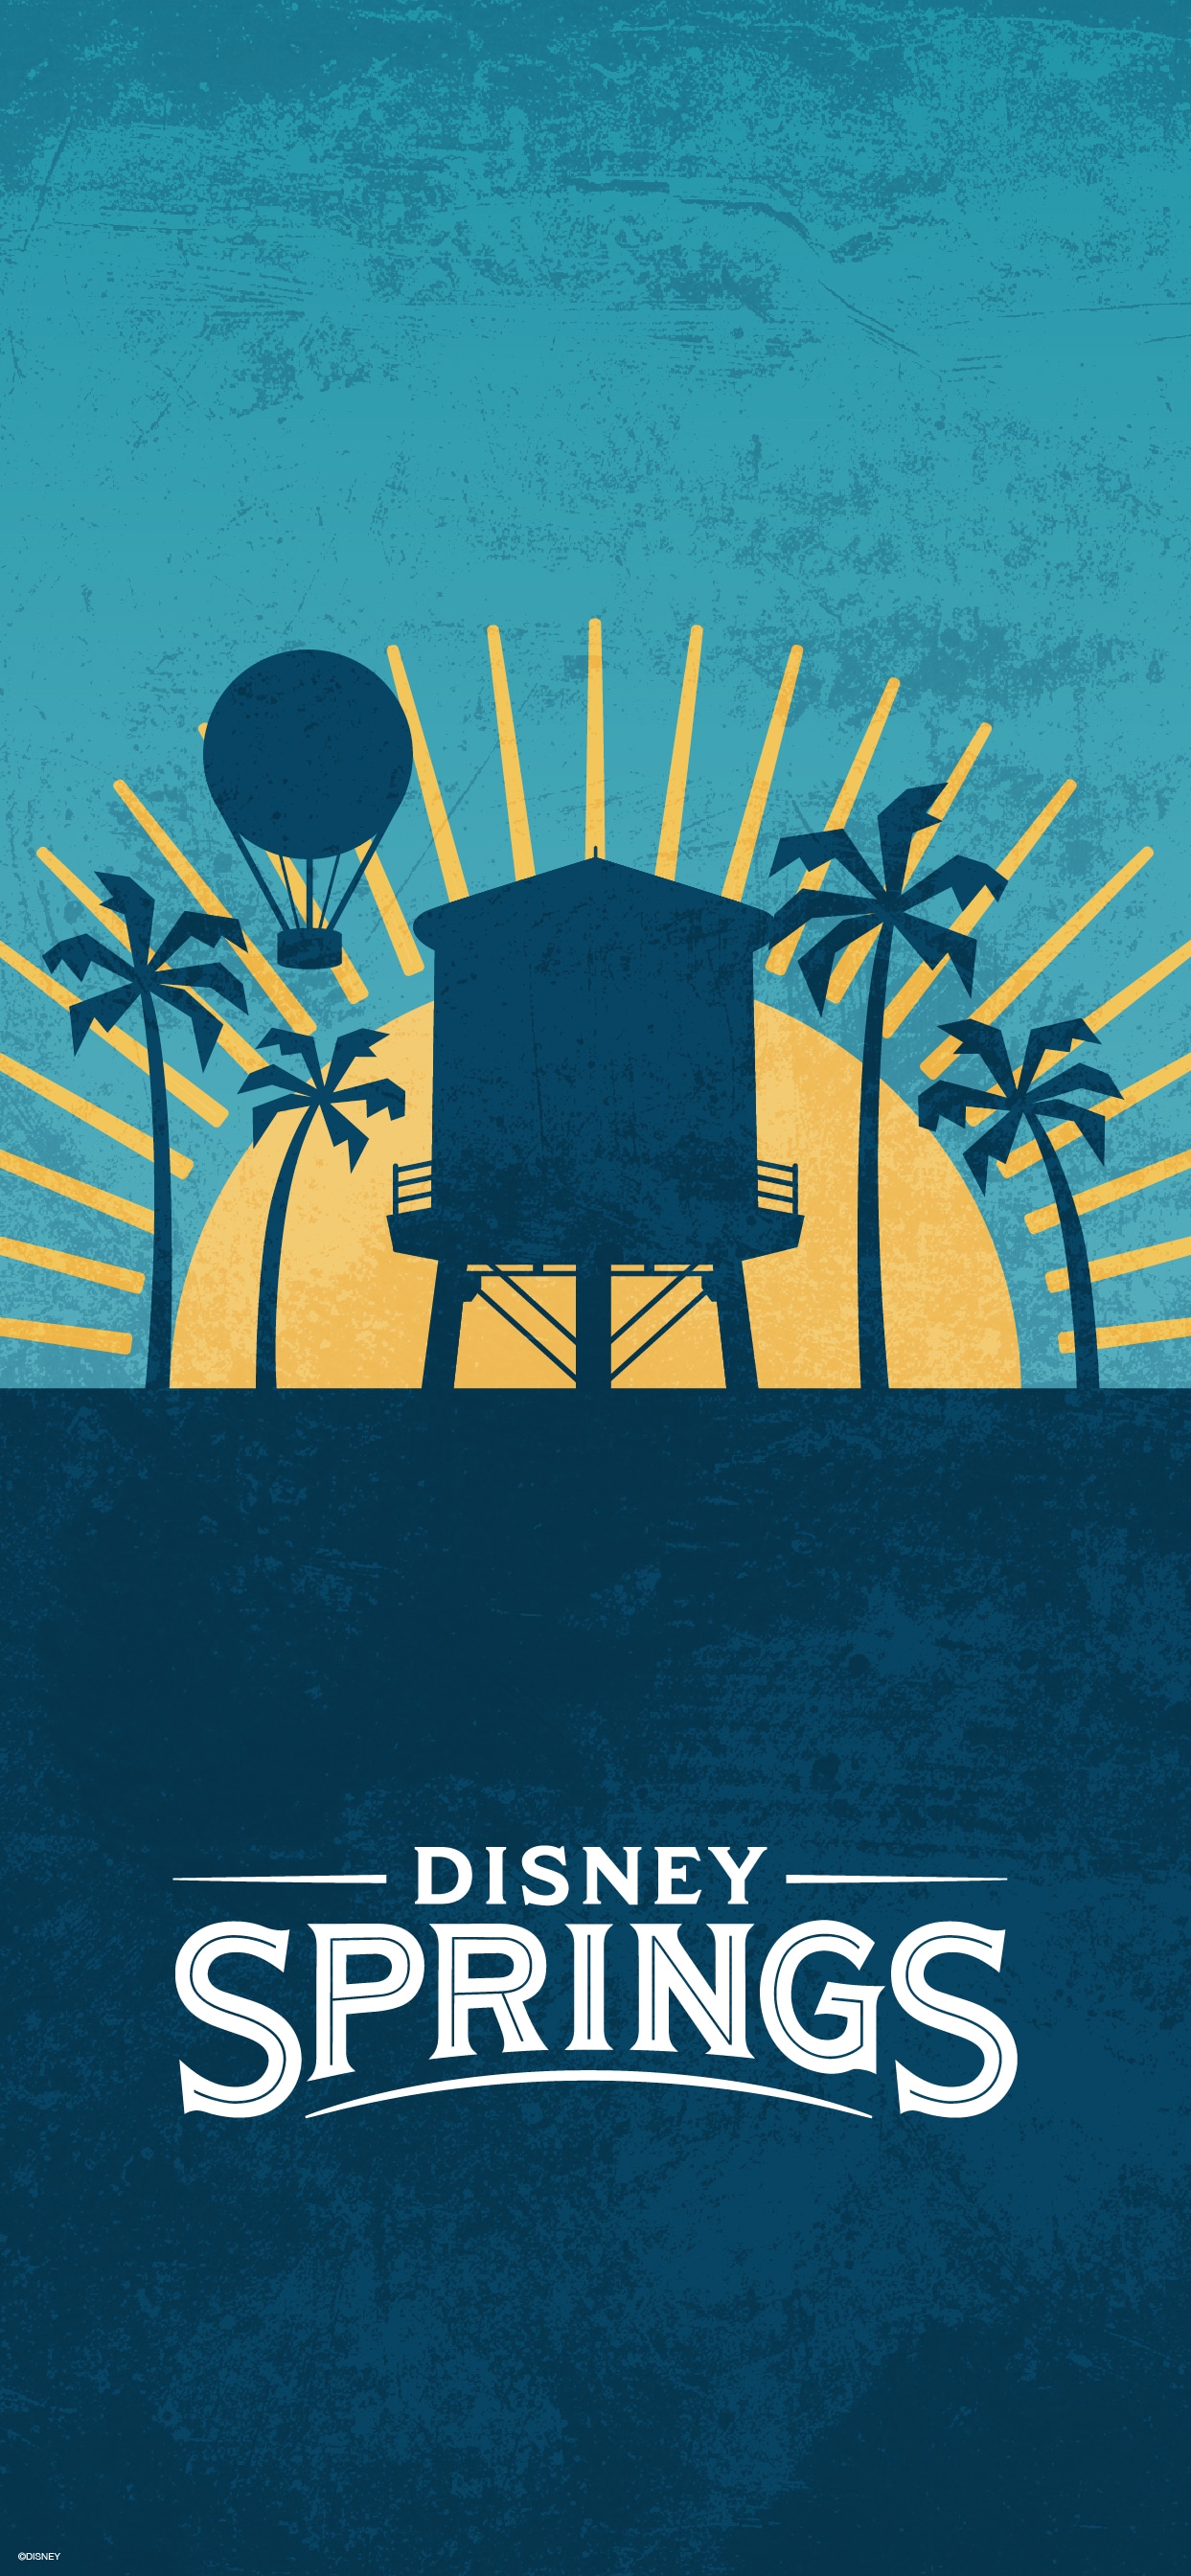 19 Disney Springs Wallpaper Iphone Android Disney Parks Blog